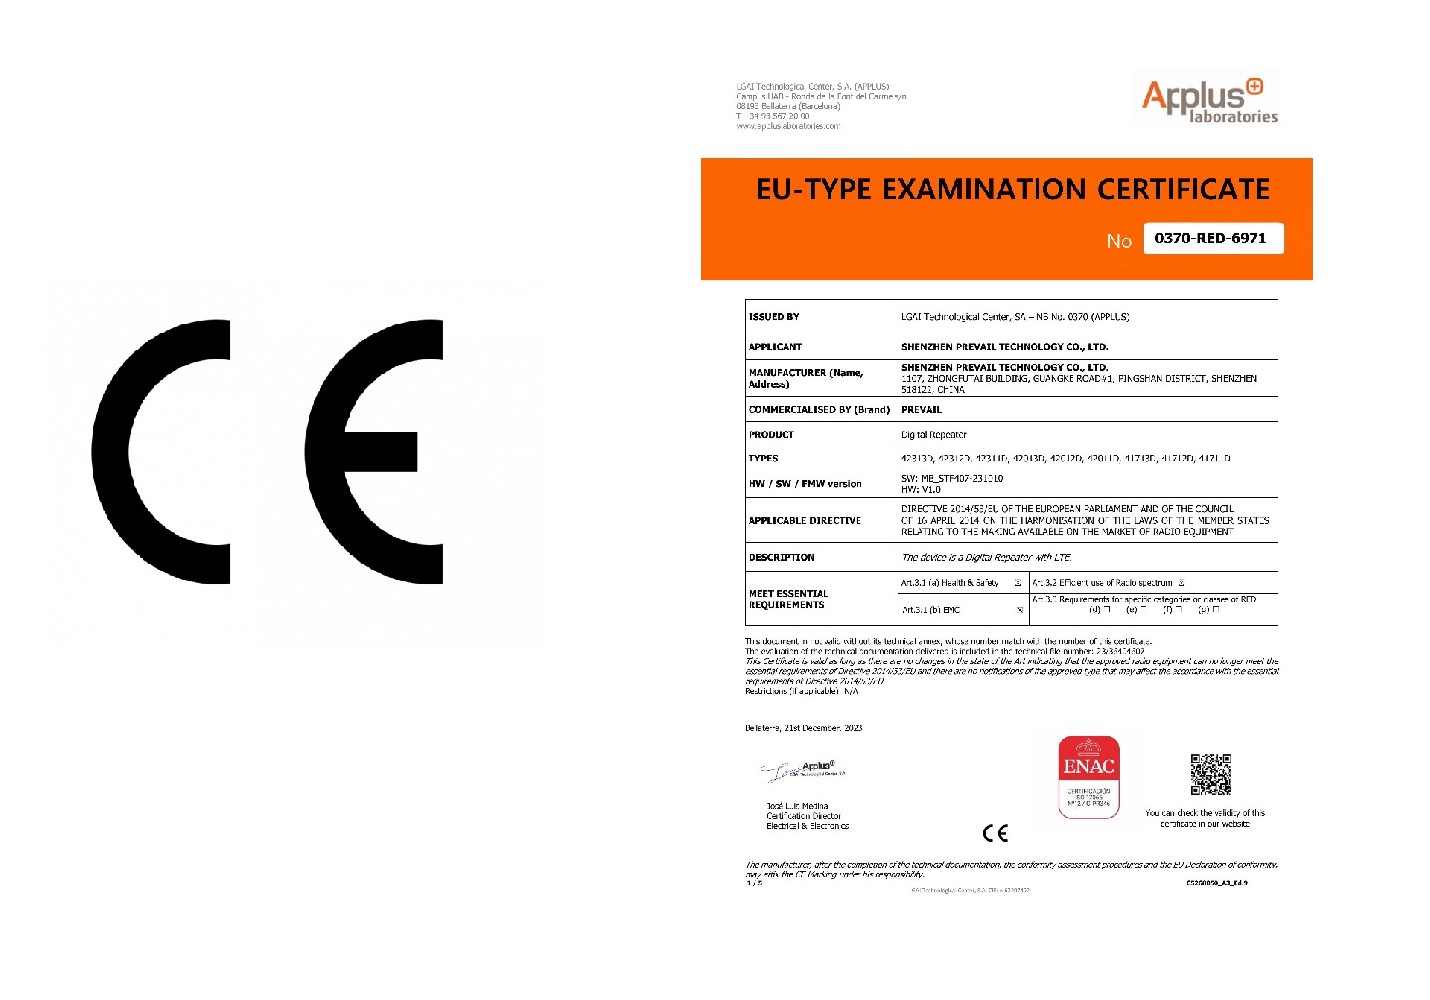 Digital Repeater CE Certified